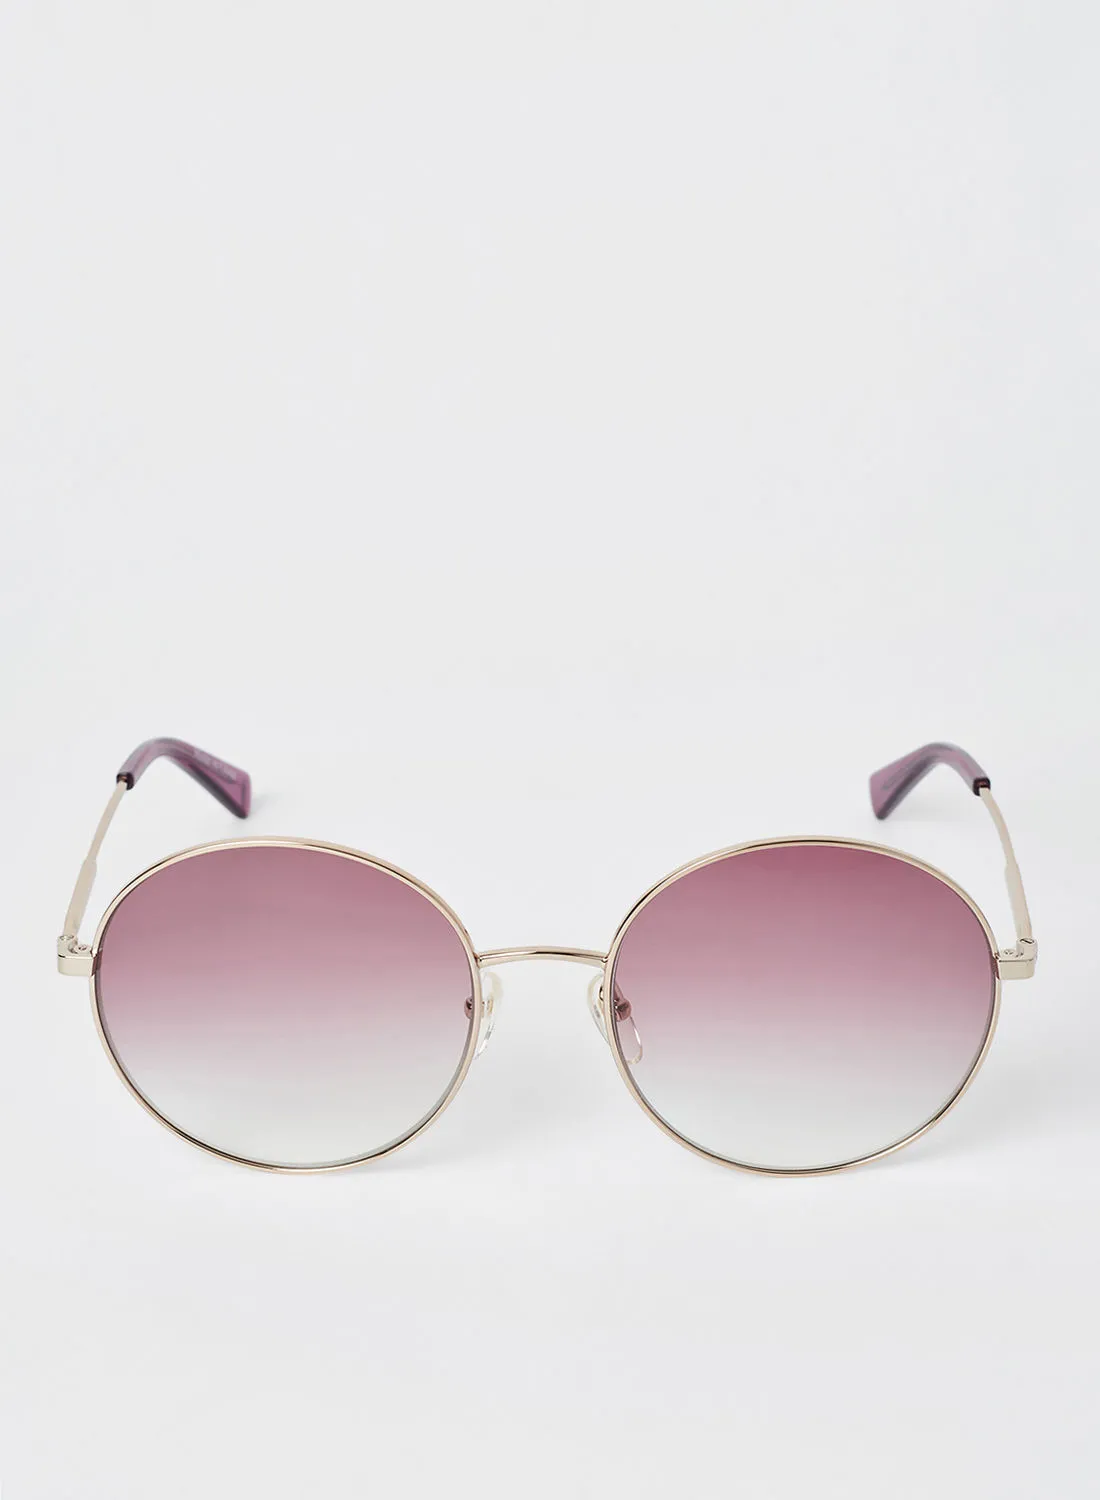 Longchamp Women's Full Rim Metal Round Sunglasses - Lens Size: 58 mm